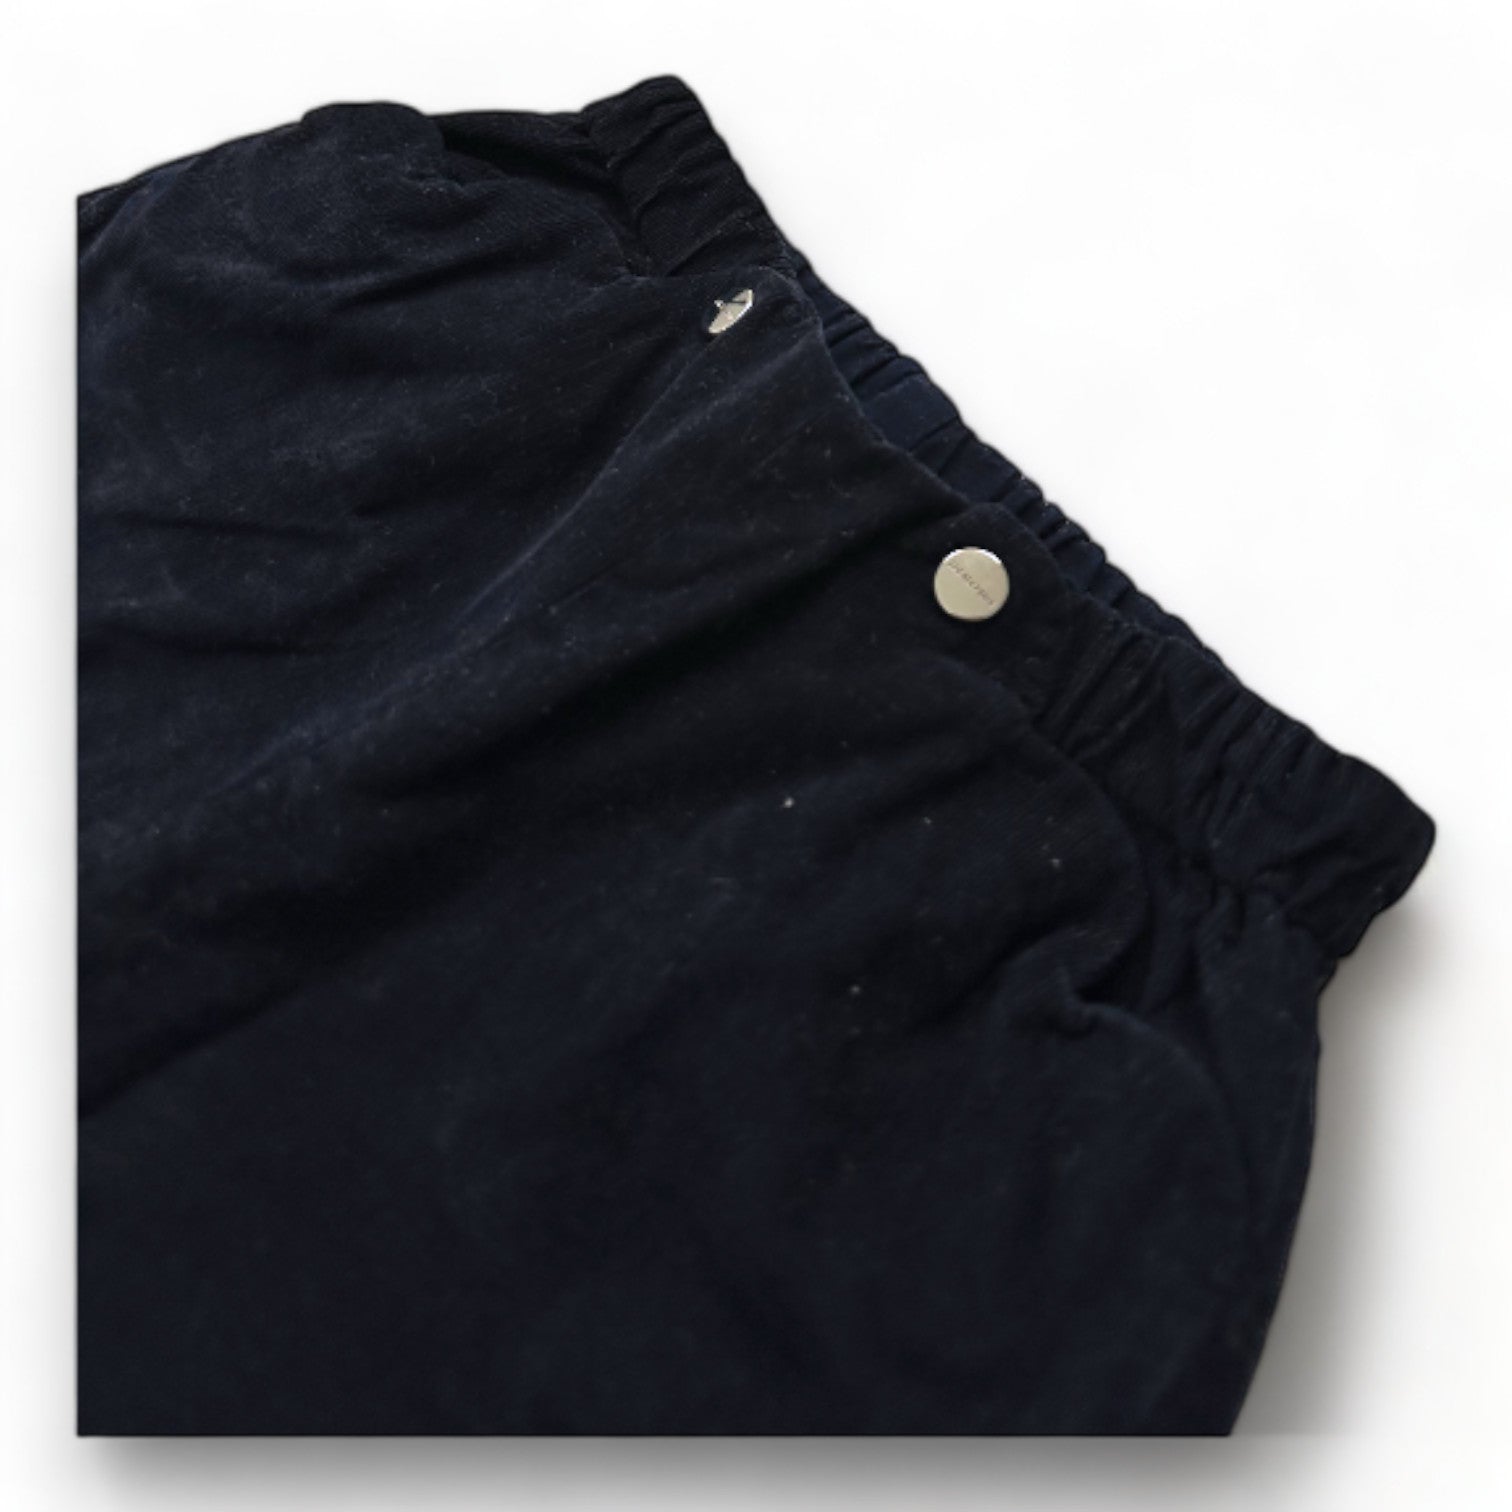 JACADI - Pantalon bleu marine en velours - 12 mois